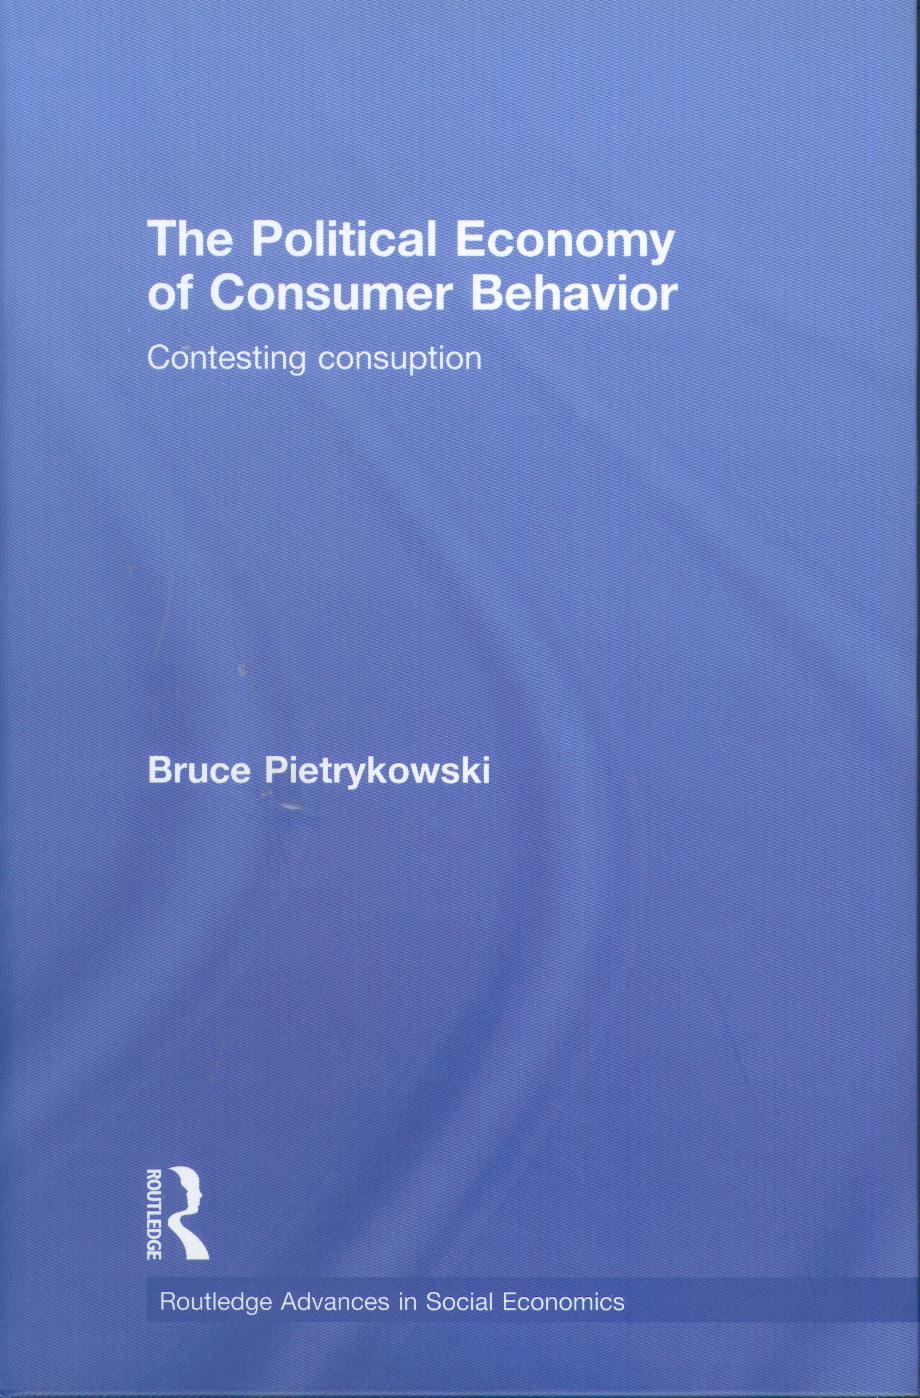 The Political Economy Of Consumer Behavior "Contesting Consumption"